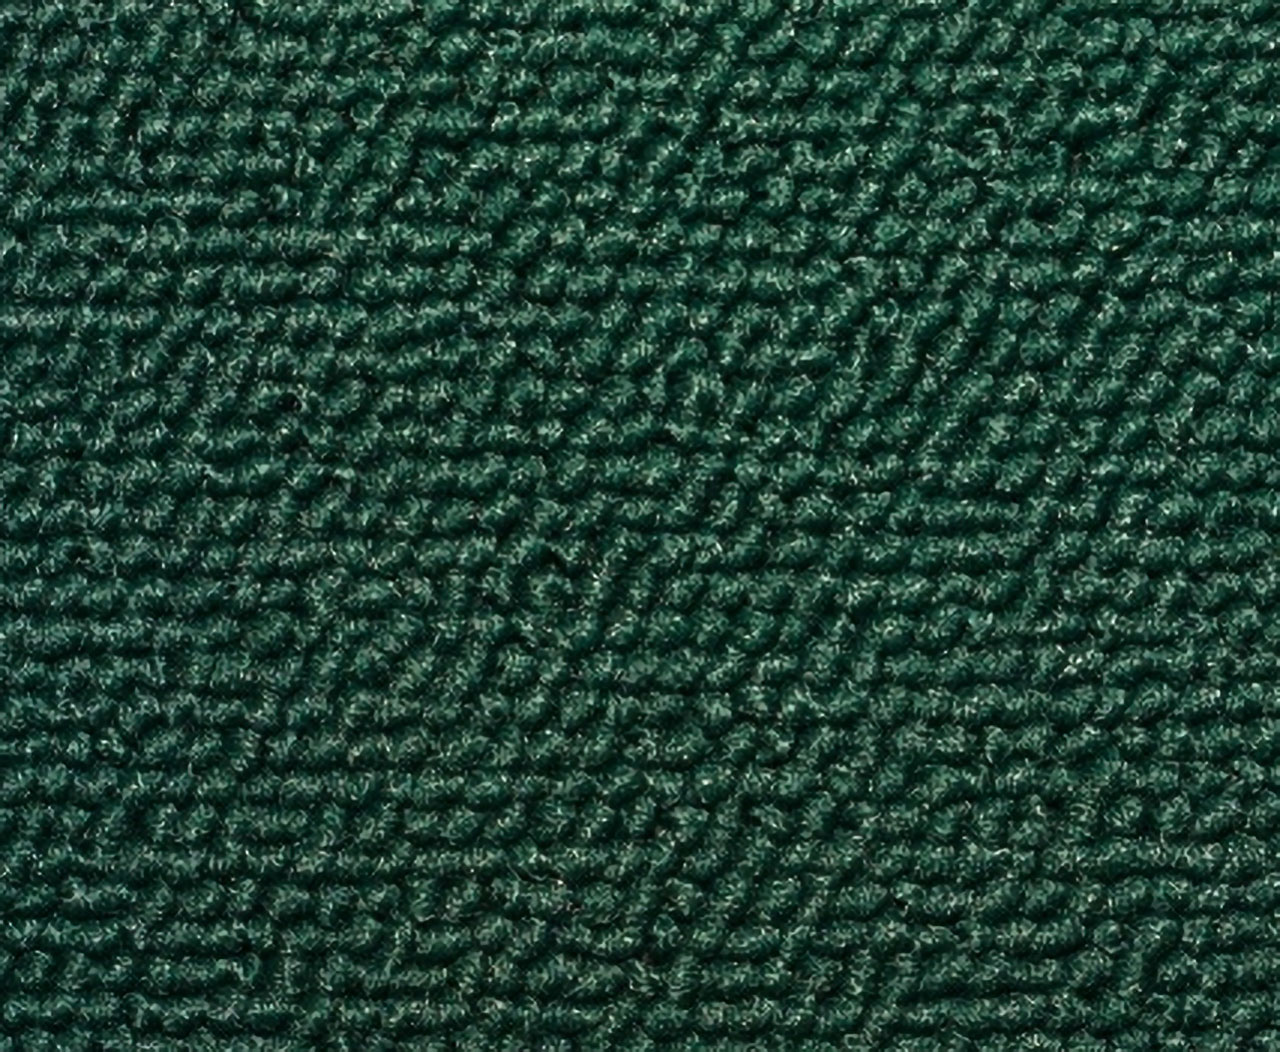 Holden Kingswood HX Kingswood Panel Van 45V Jade Green Carpet (Image 1 of 1)